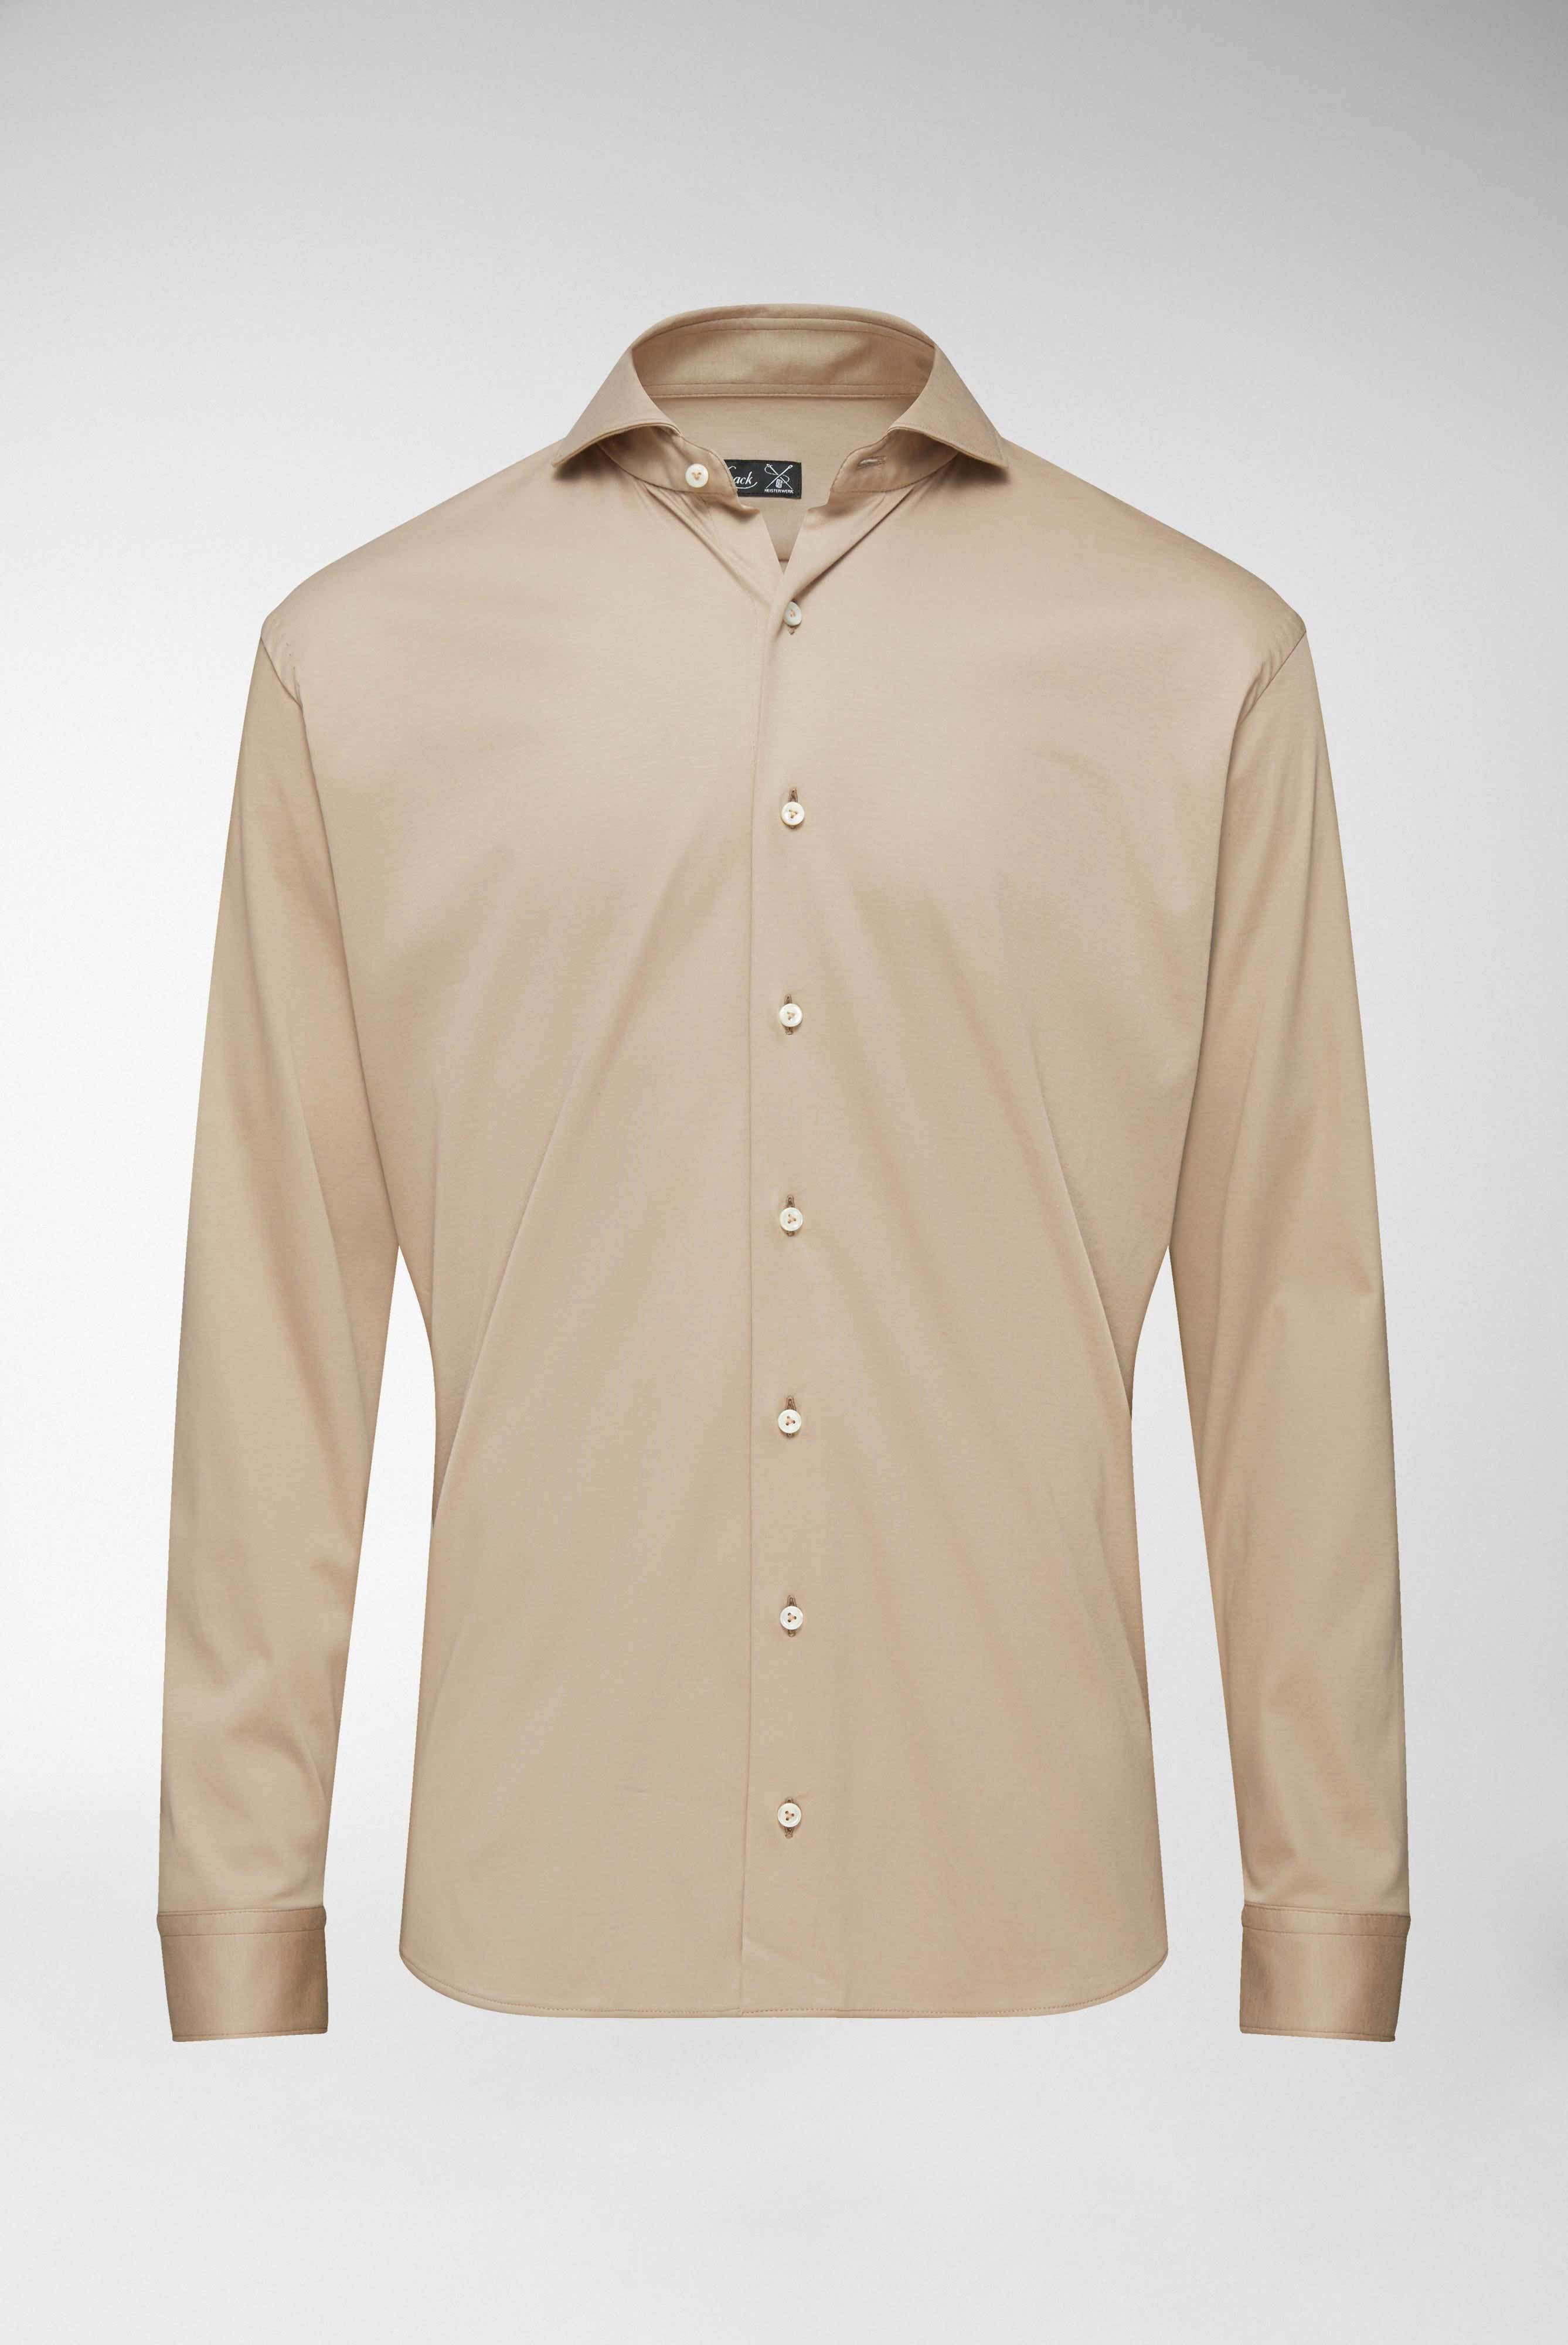 Casual Hemden+Jersey Hemd aus Schweizer Baumwolle Tailor Fit+20.1683.UC.180031.140.XL